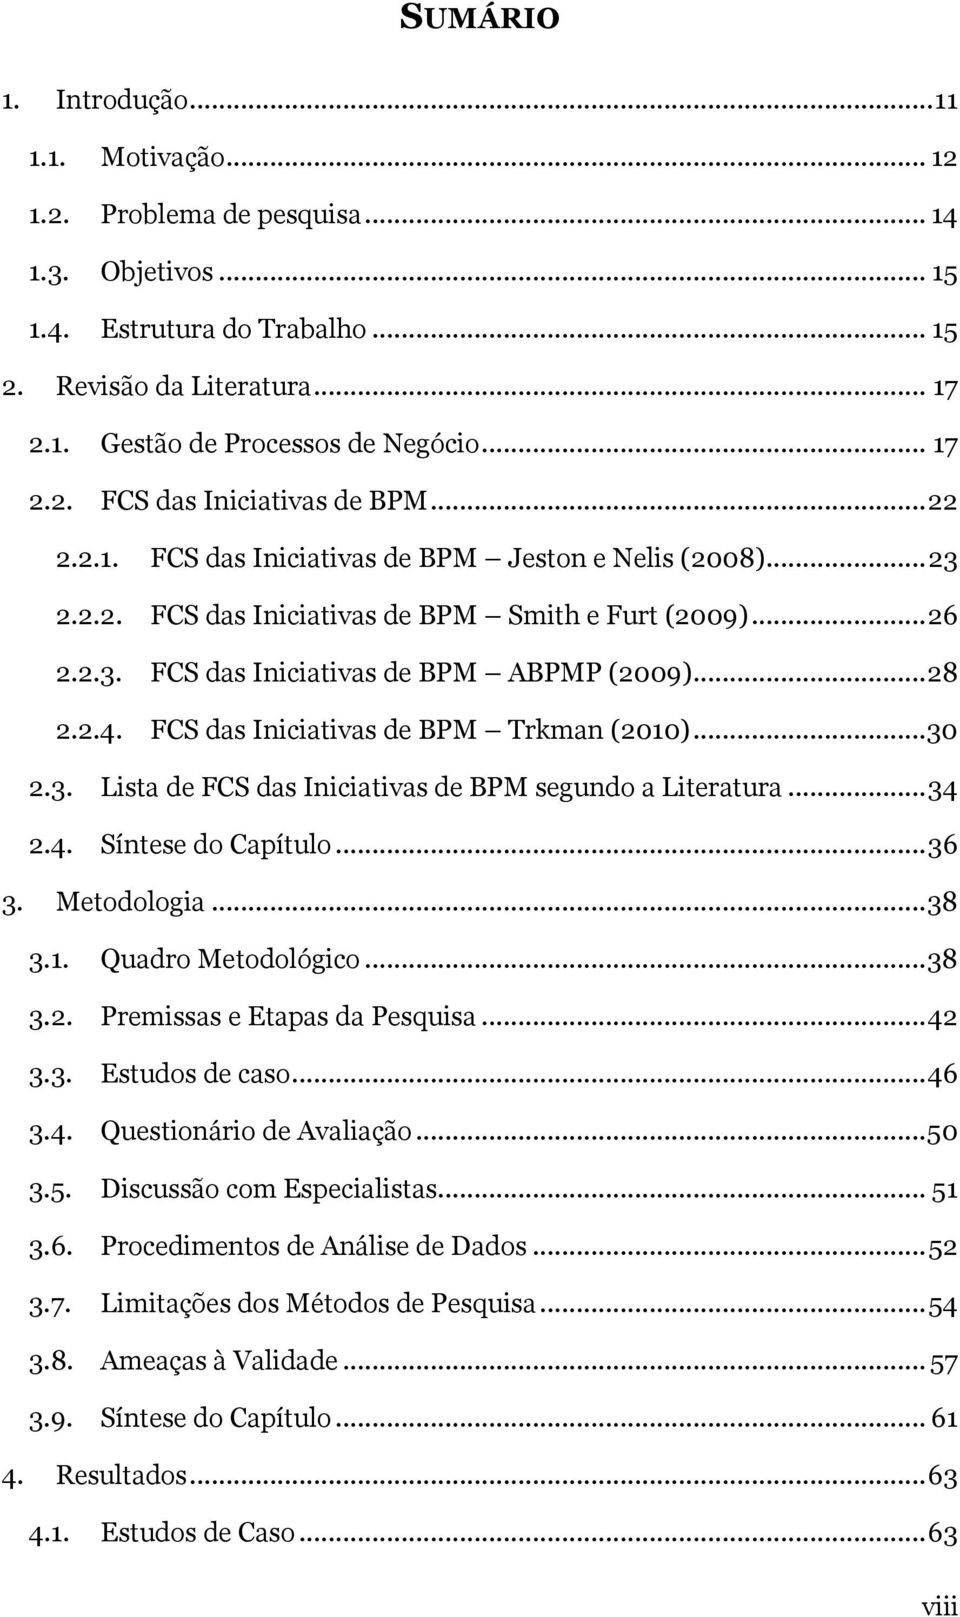 .. 28 2.2.4. FCS das Iniciativas de BPM Trkman (2010)...30 2.3. Lista de FCS das Iniciativas de BPM segundo a Literatura... 34 2.4. Síntese do Capítulo... 36 3. Metodologia... 38 3.1. Quadro Metodológico.